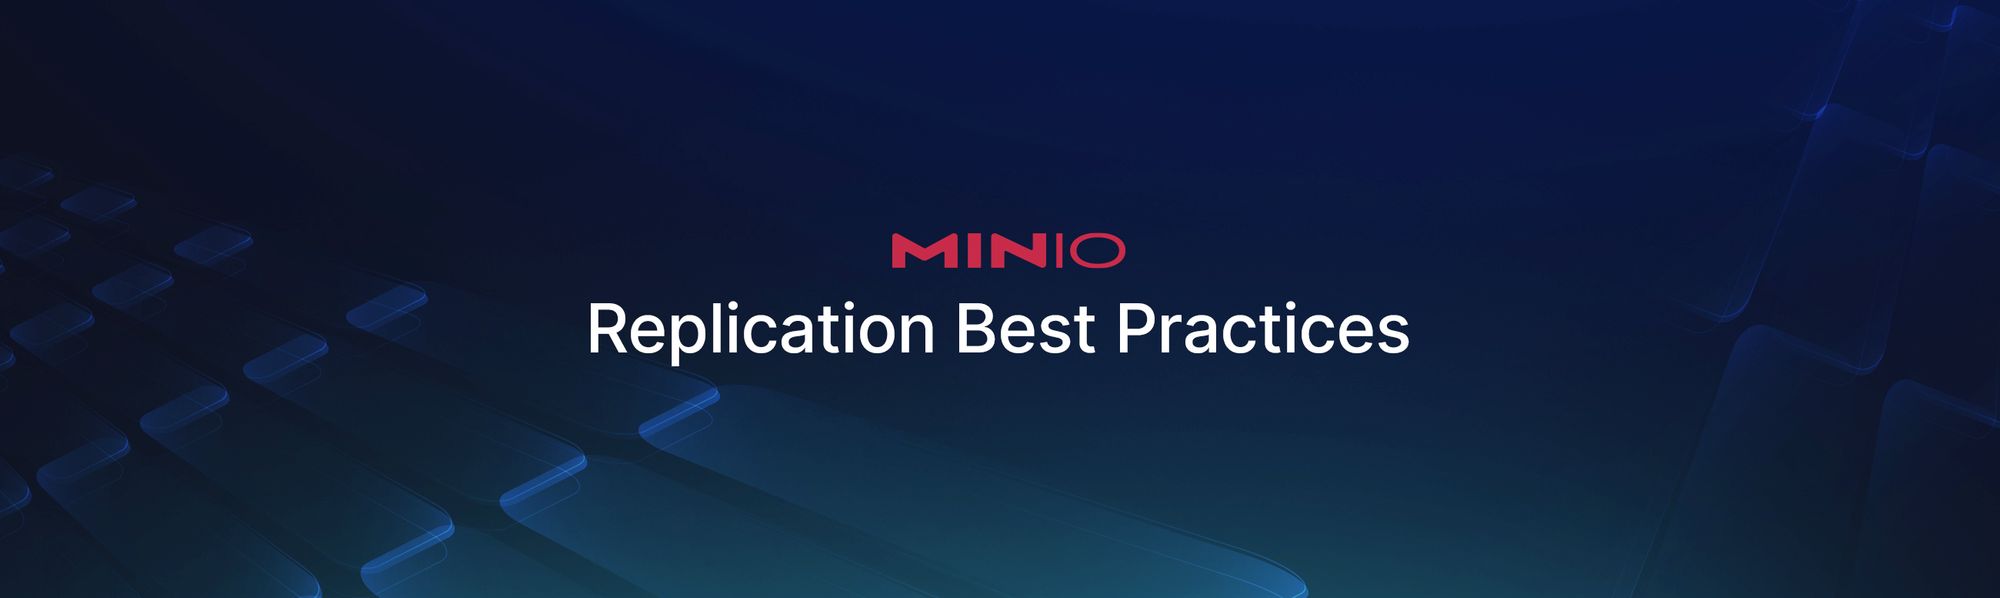 MinIO Replication Best Practices